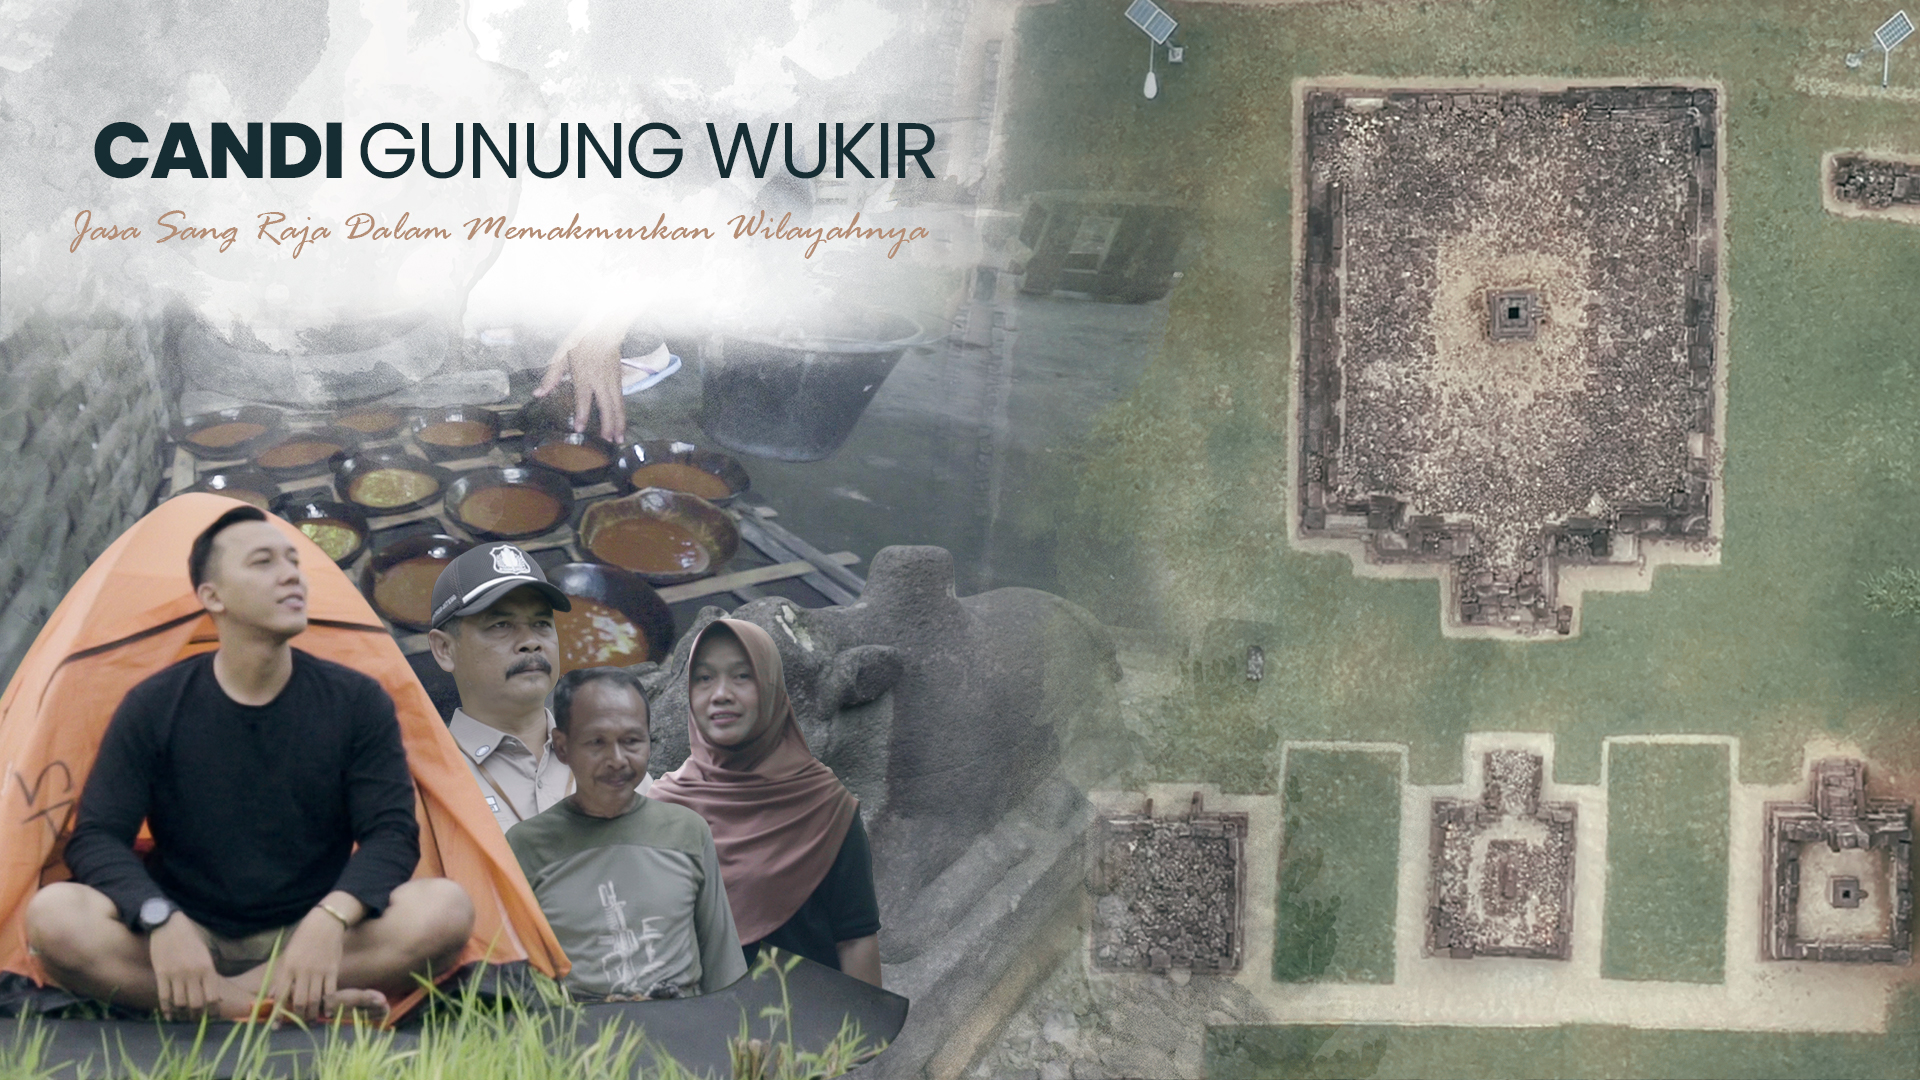 You are currently viewing Candi Gunung Wukir, Jasa Sang Raja Memakmurkan Wilayahnya